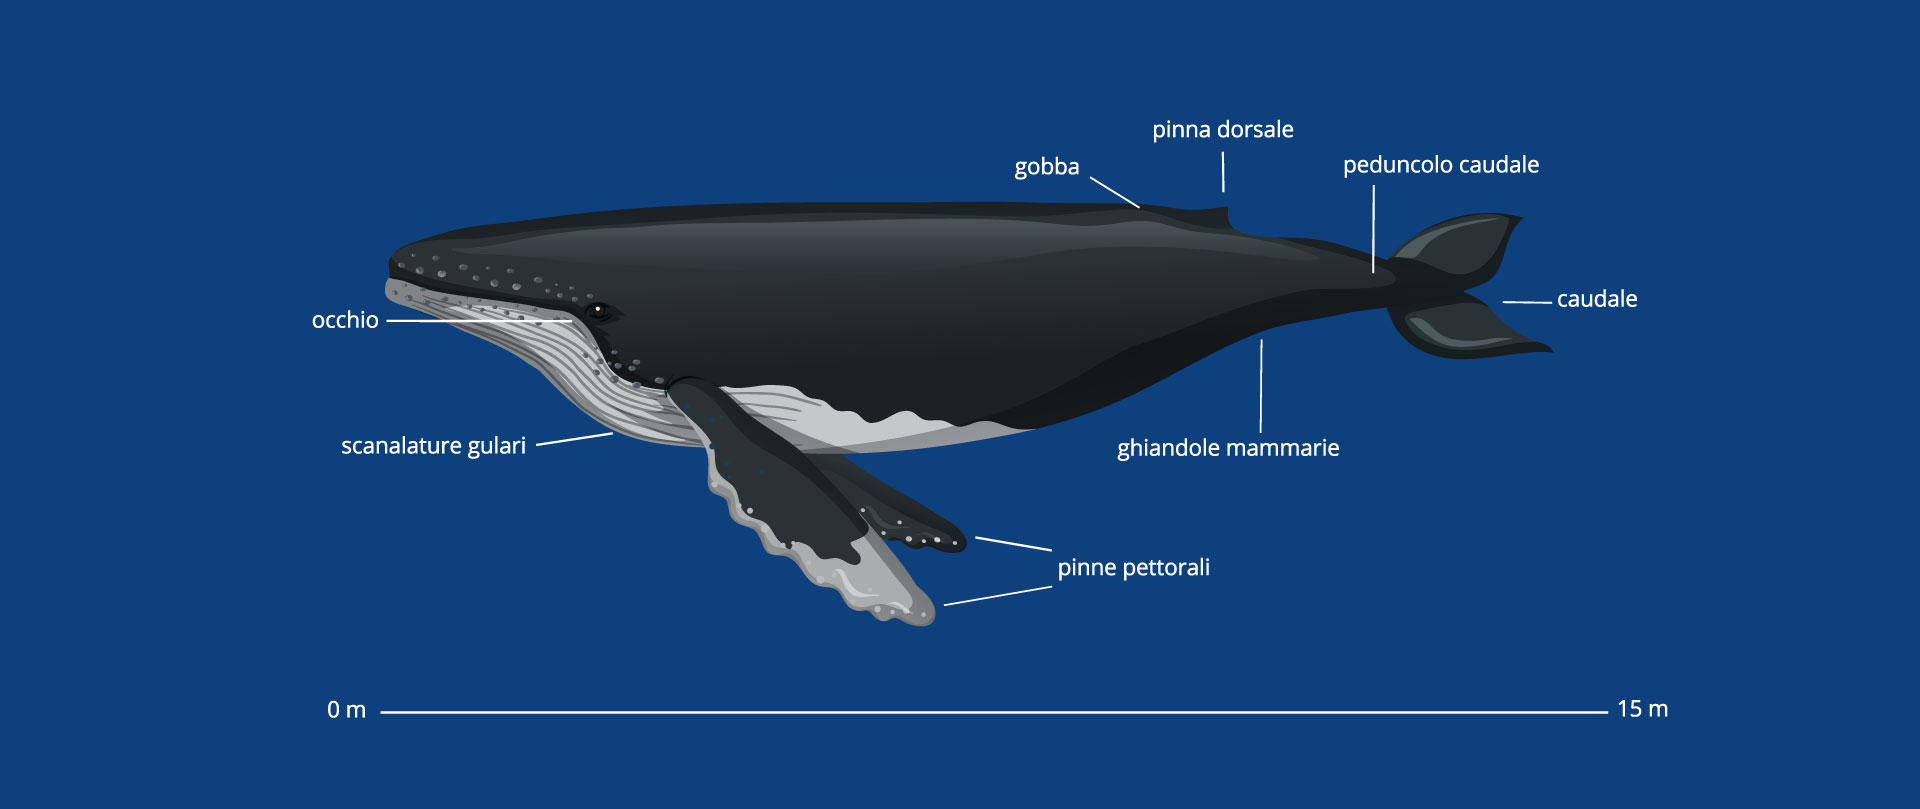  diagramma esplicativo della balena